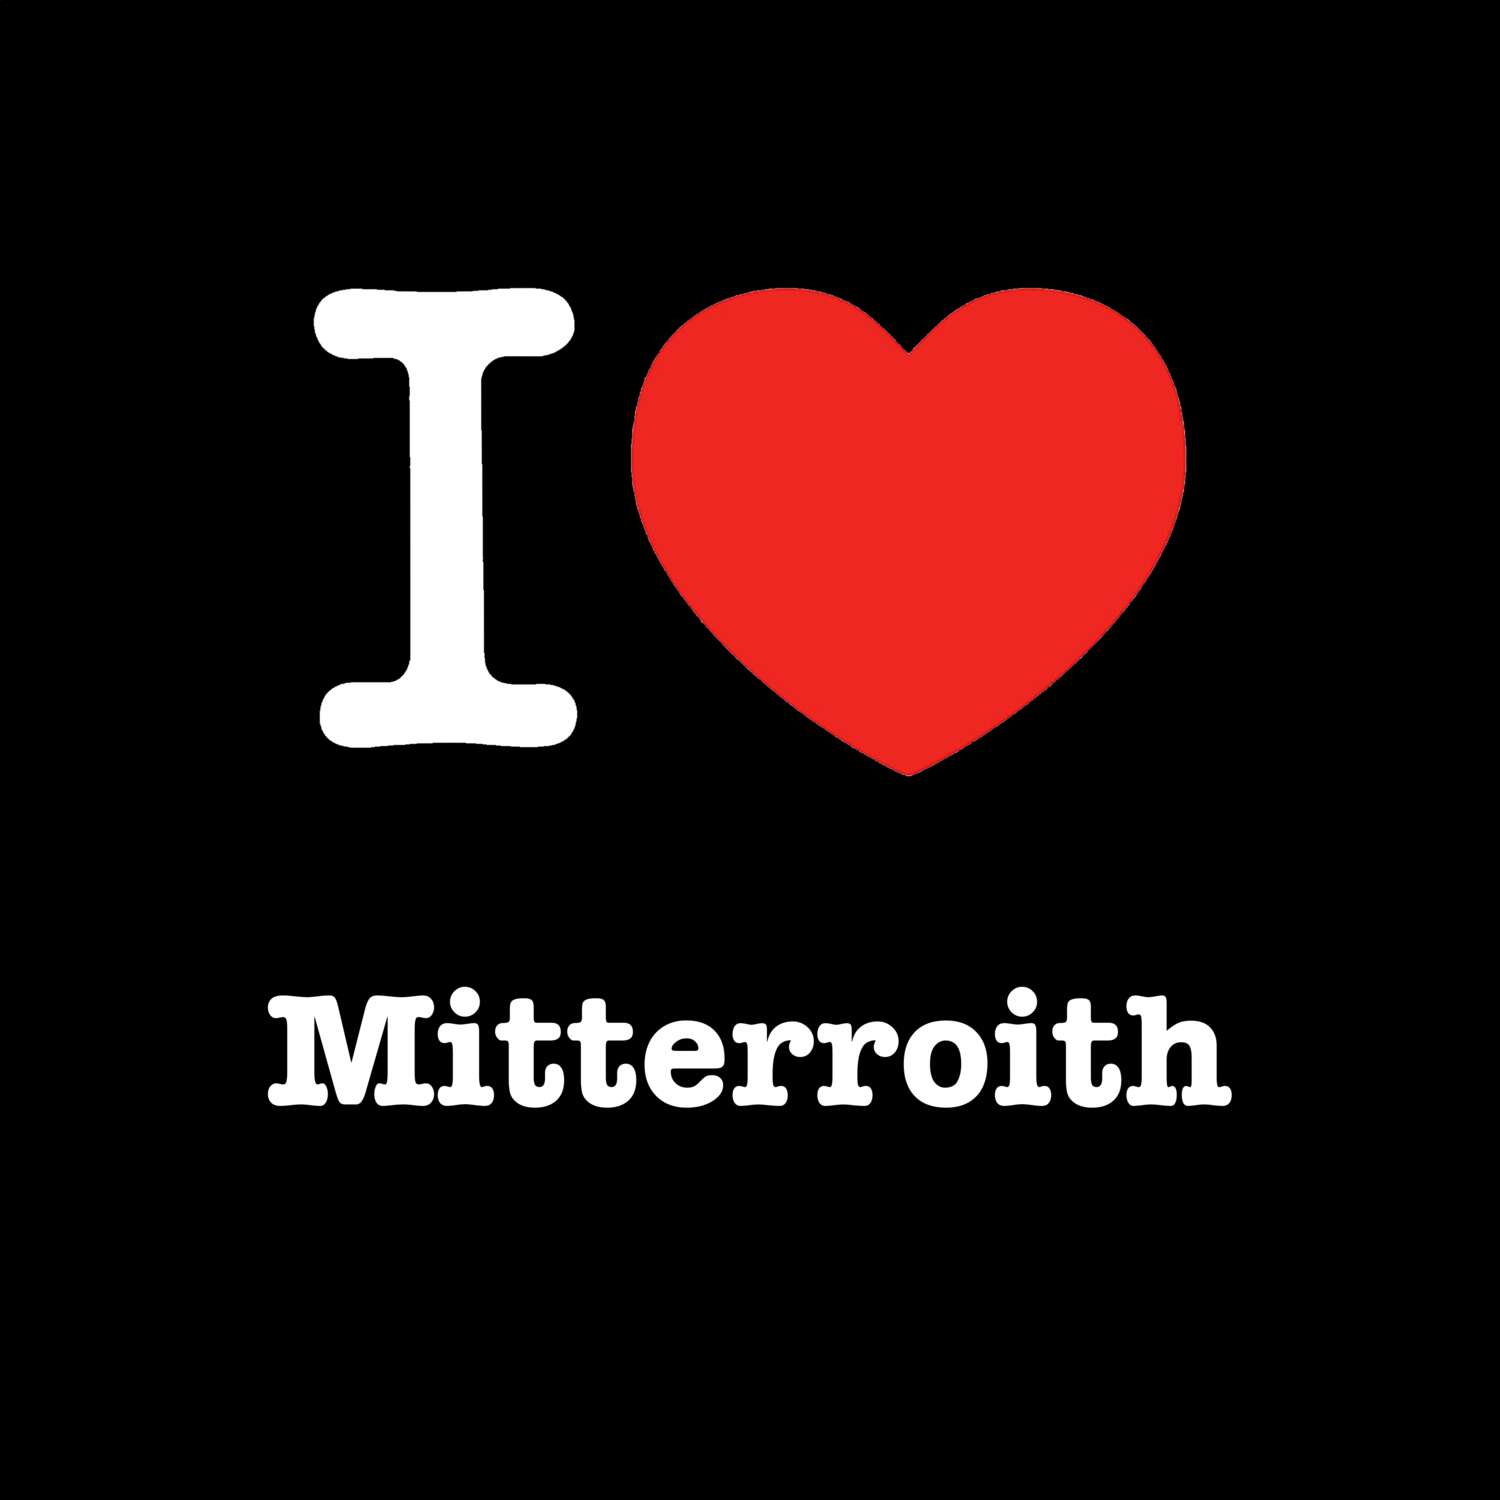 Mitterroith T-Shirt »I love«